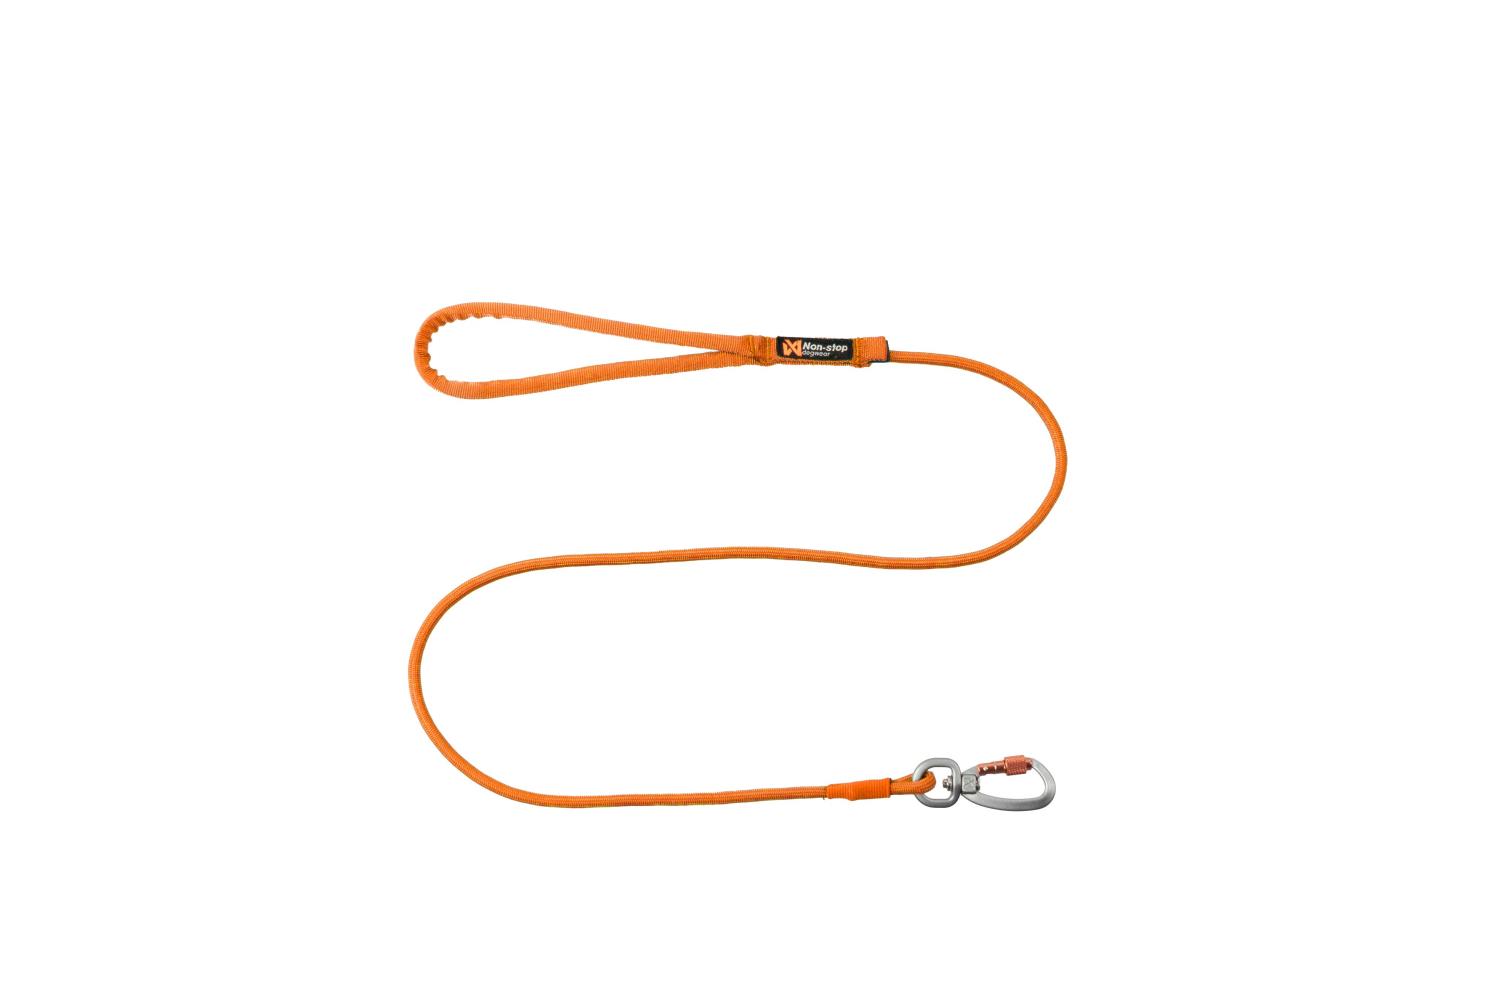 Trekking rope leash, unisex, orange, 1.2m/8mm, single